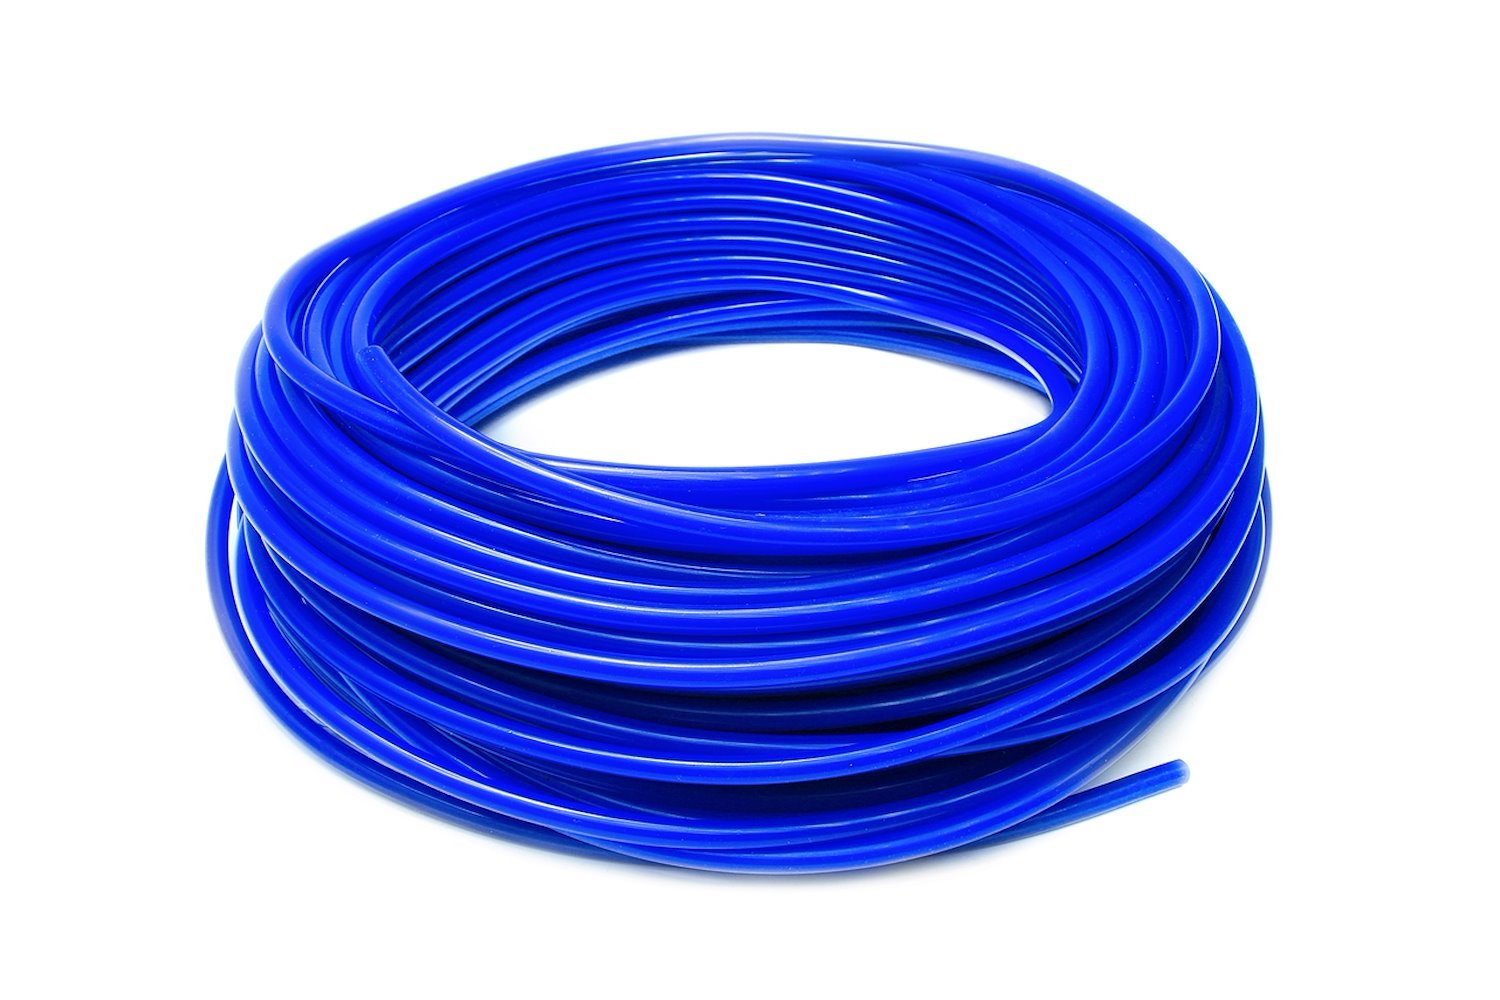 HTSVH5-BLUEx100 High-Temperature Silicone Vacuum Hose Tubing, 13/64 in. ID, 100 ft. Roll, Blue